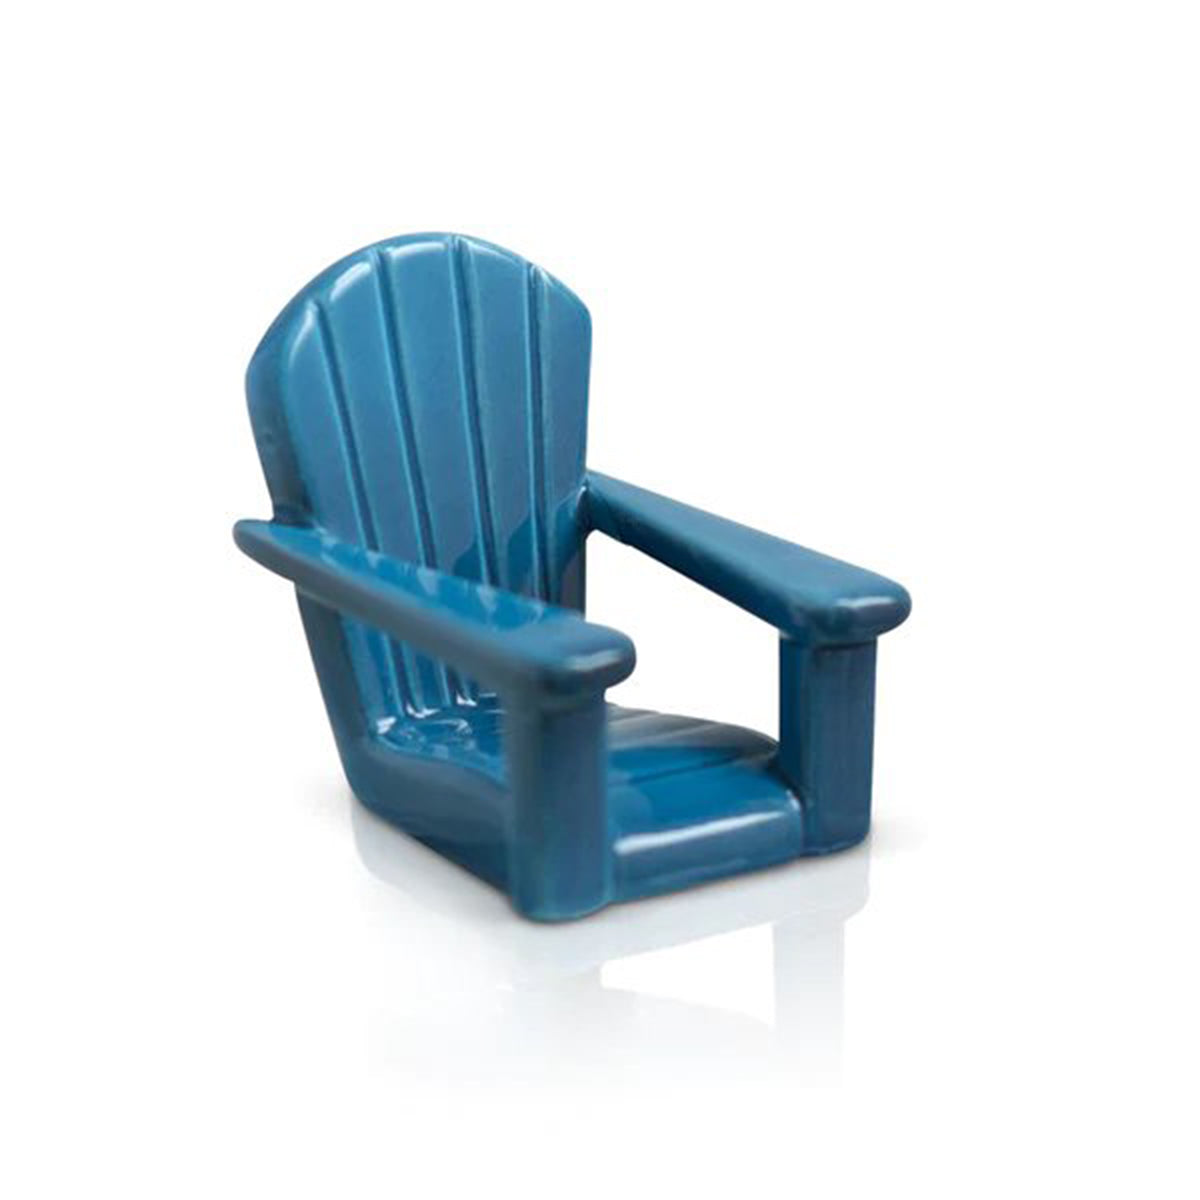 Nora Fleming "Chillin Chair" Adirondack Chair Mini